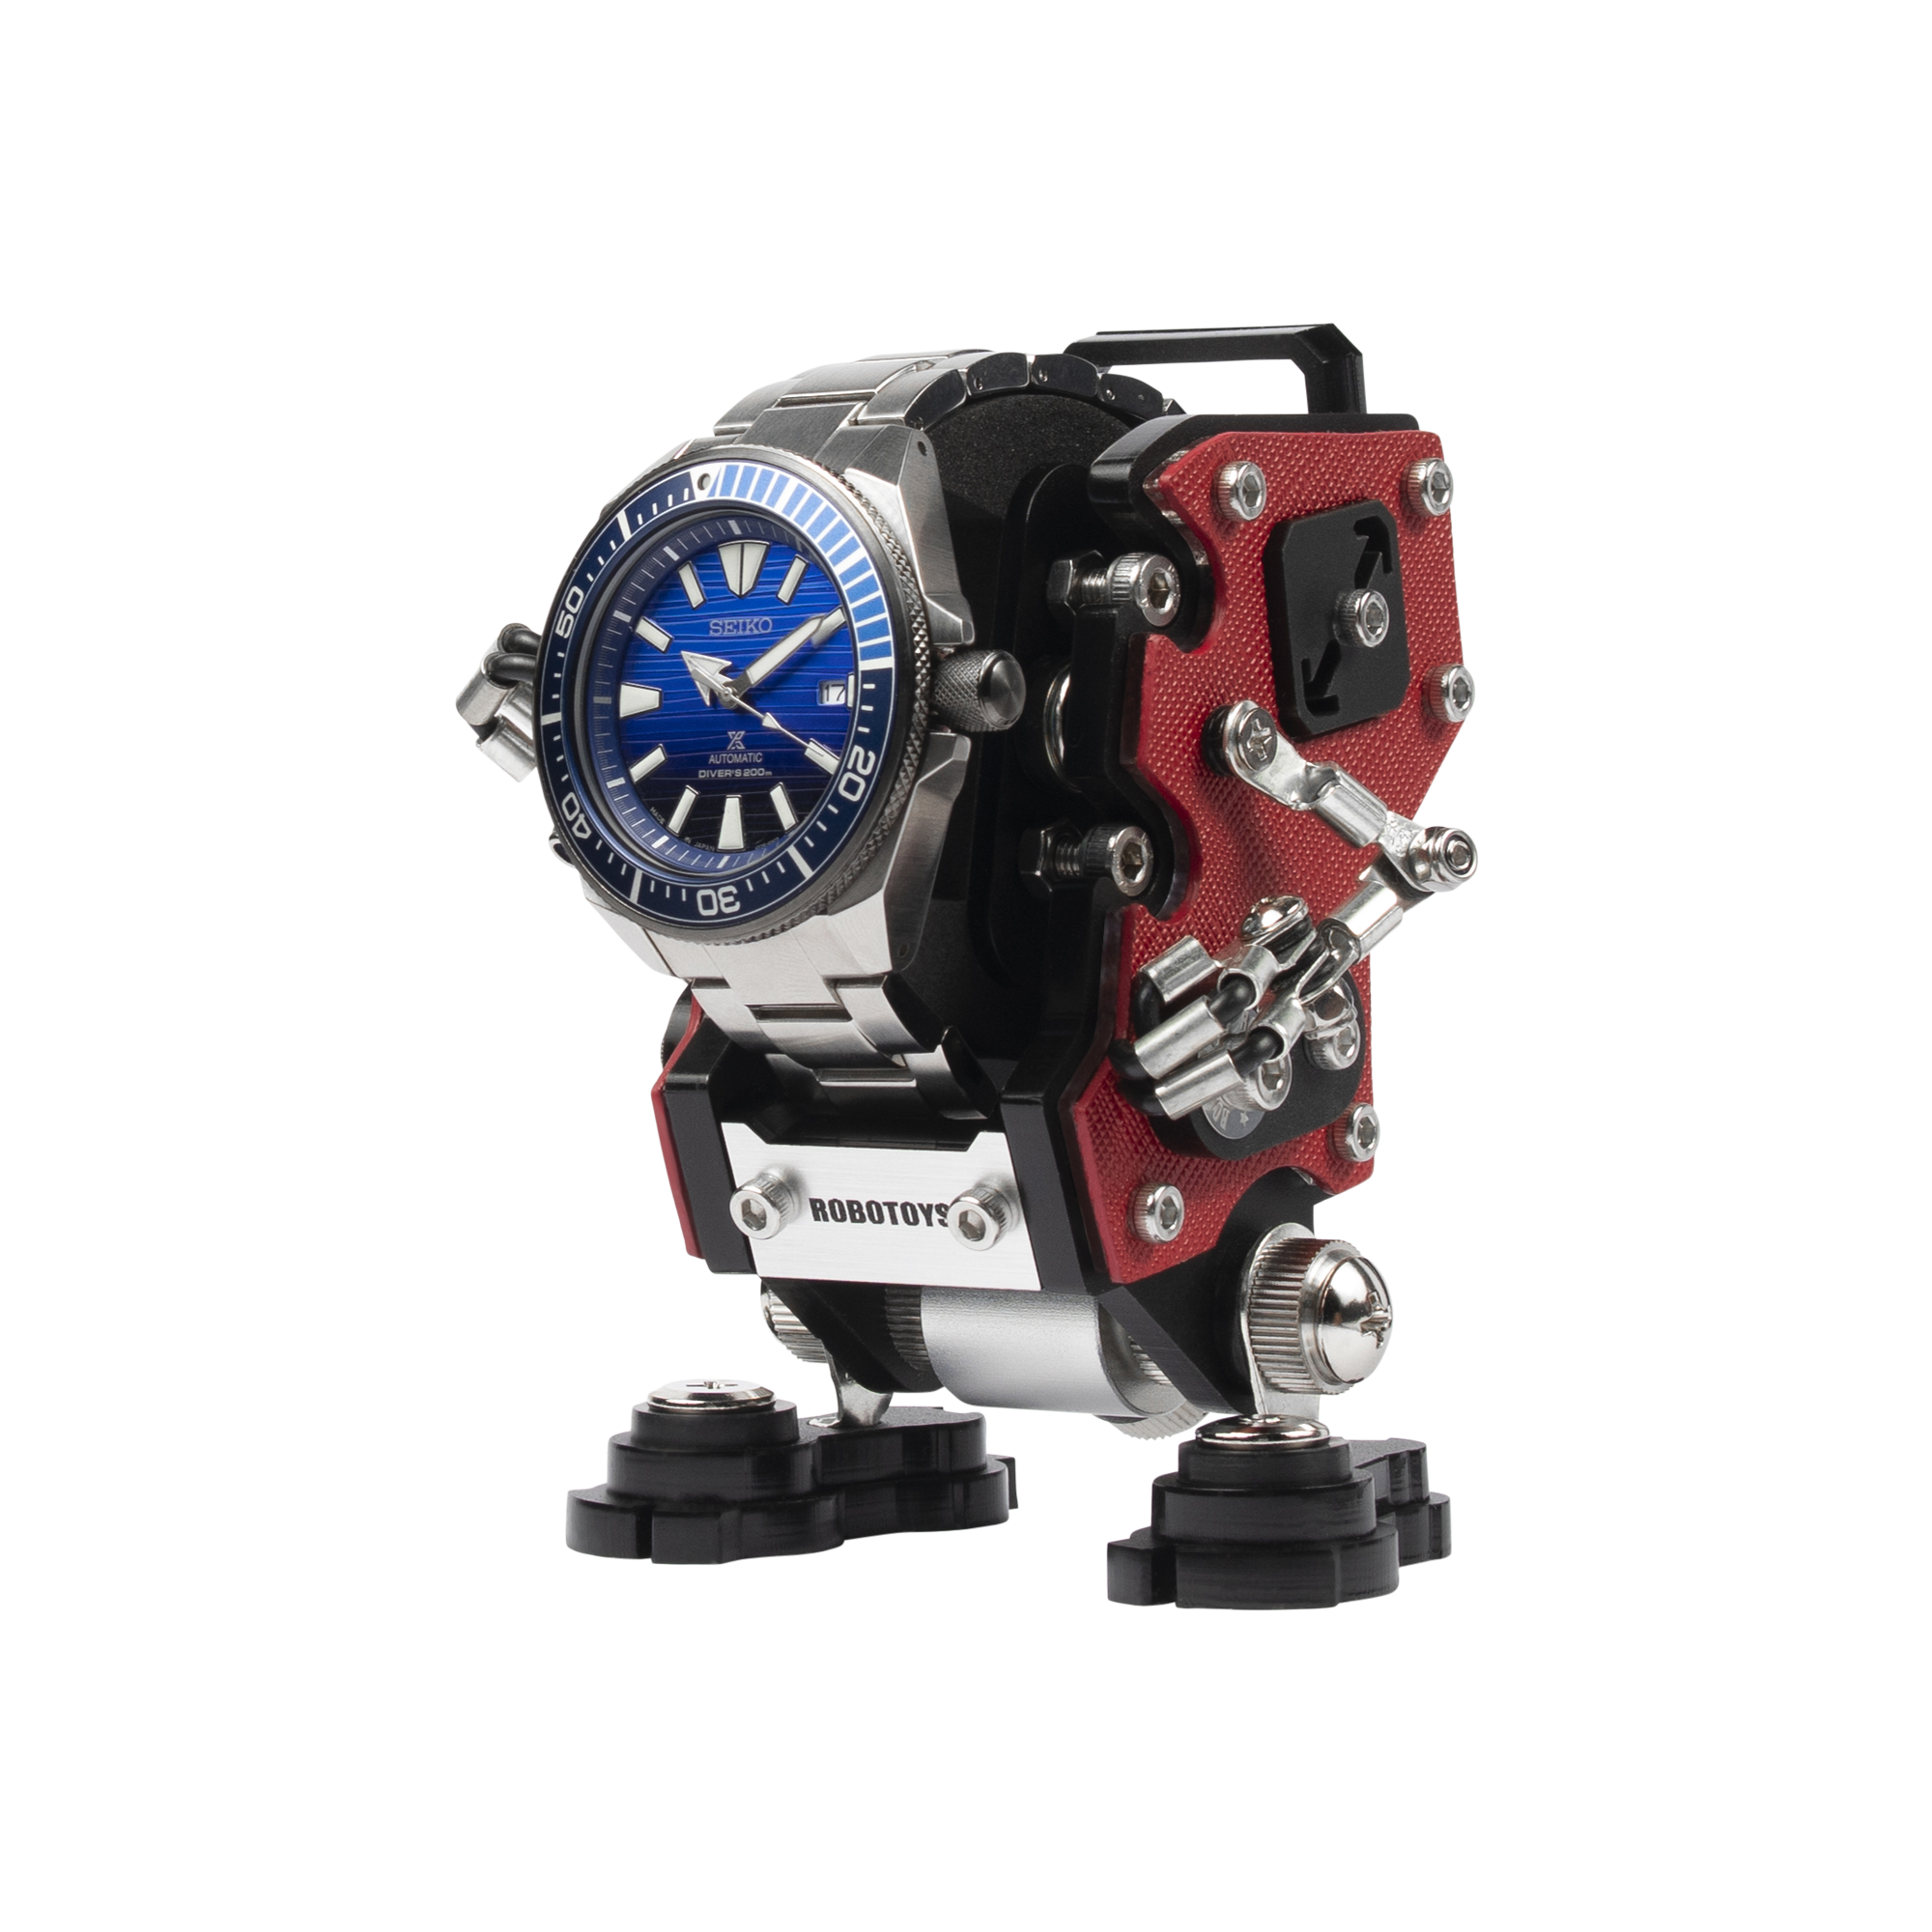 [RoboToys] Watch Stand - NanoBot - Saffiano Red